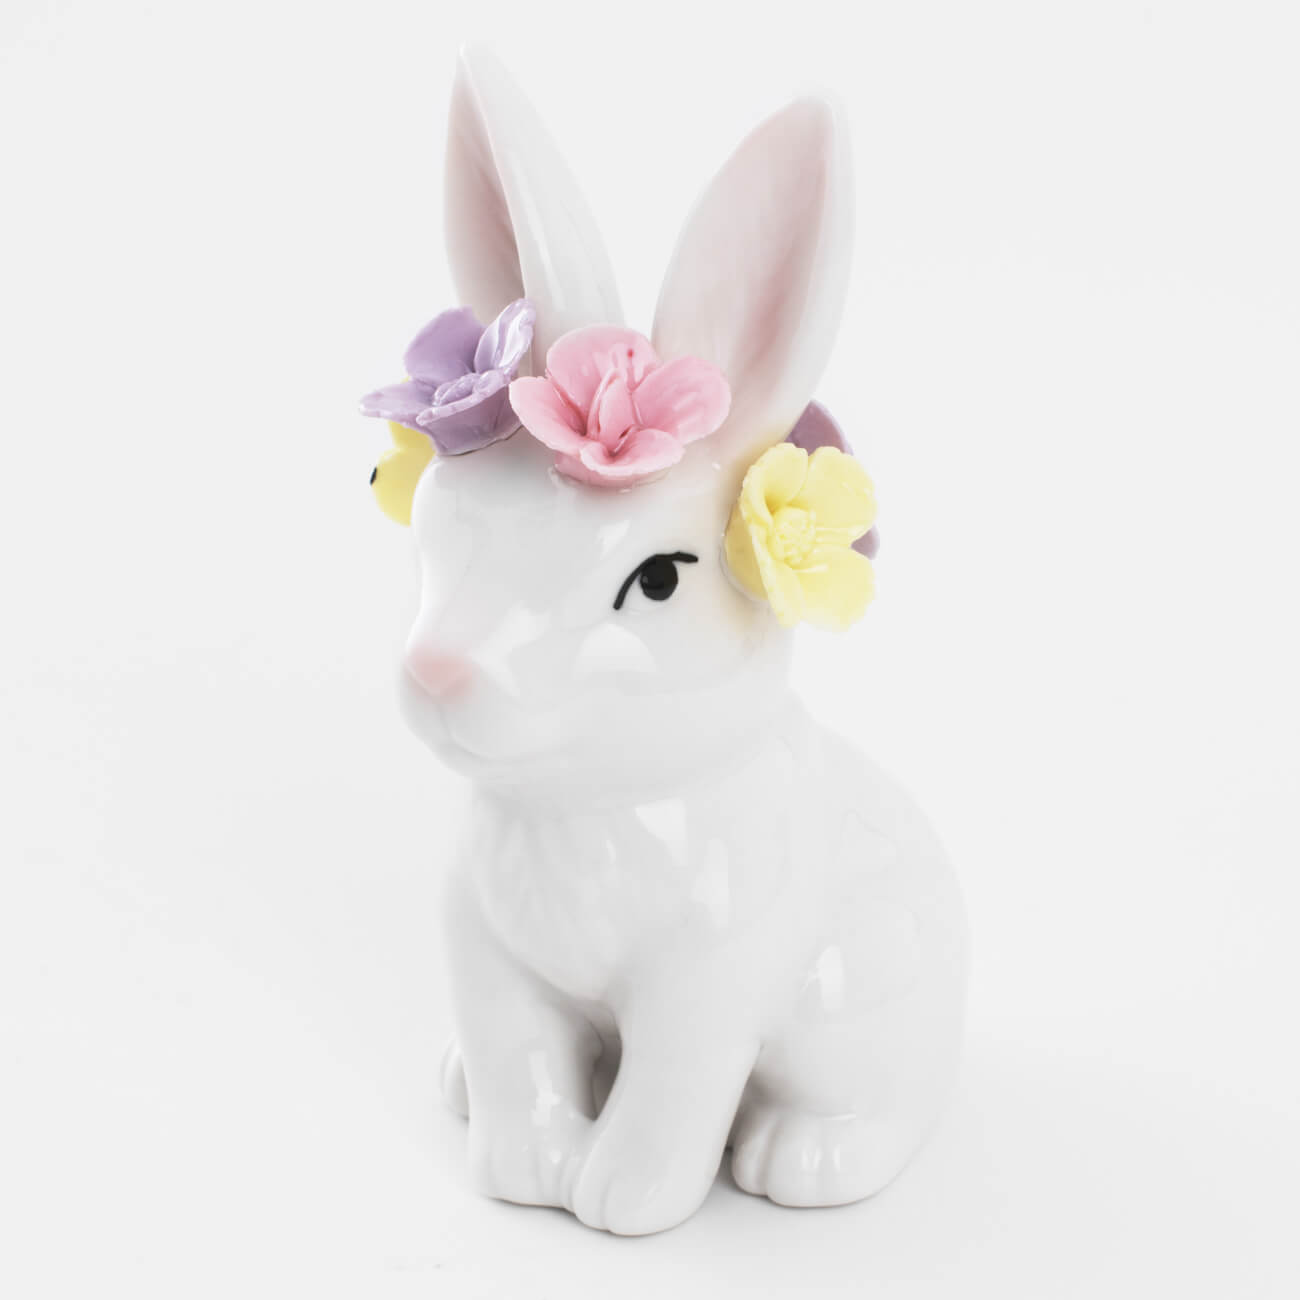 статуэтка 15 см фарфор porcelain белая кролик в ах pure easter Статуэтка, 12 см, фарфор P, белая, Кролик в цветочном венке, Easter